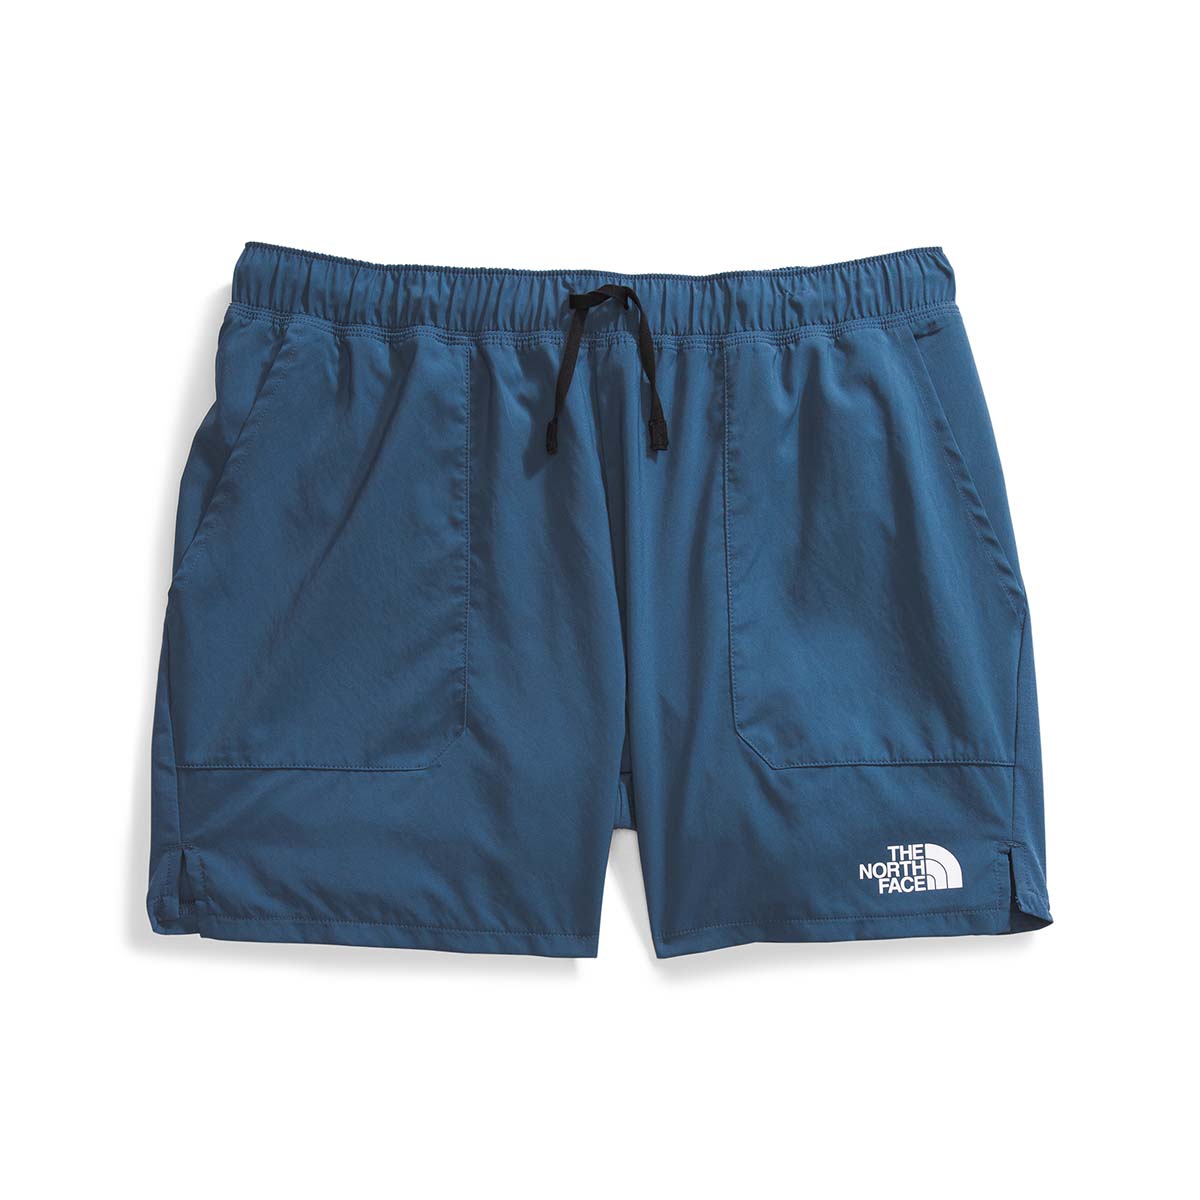 The North Face Men's Sunriser 5" Shorts